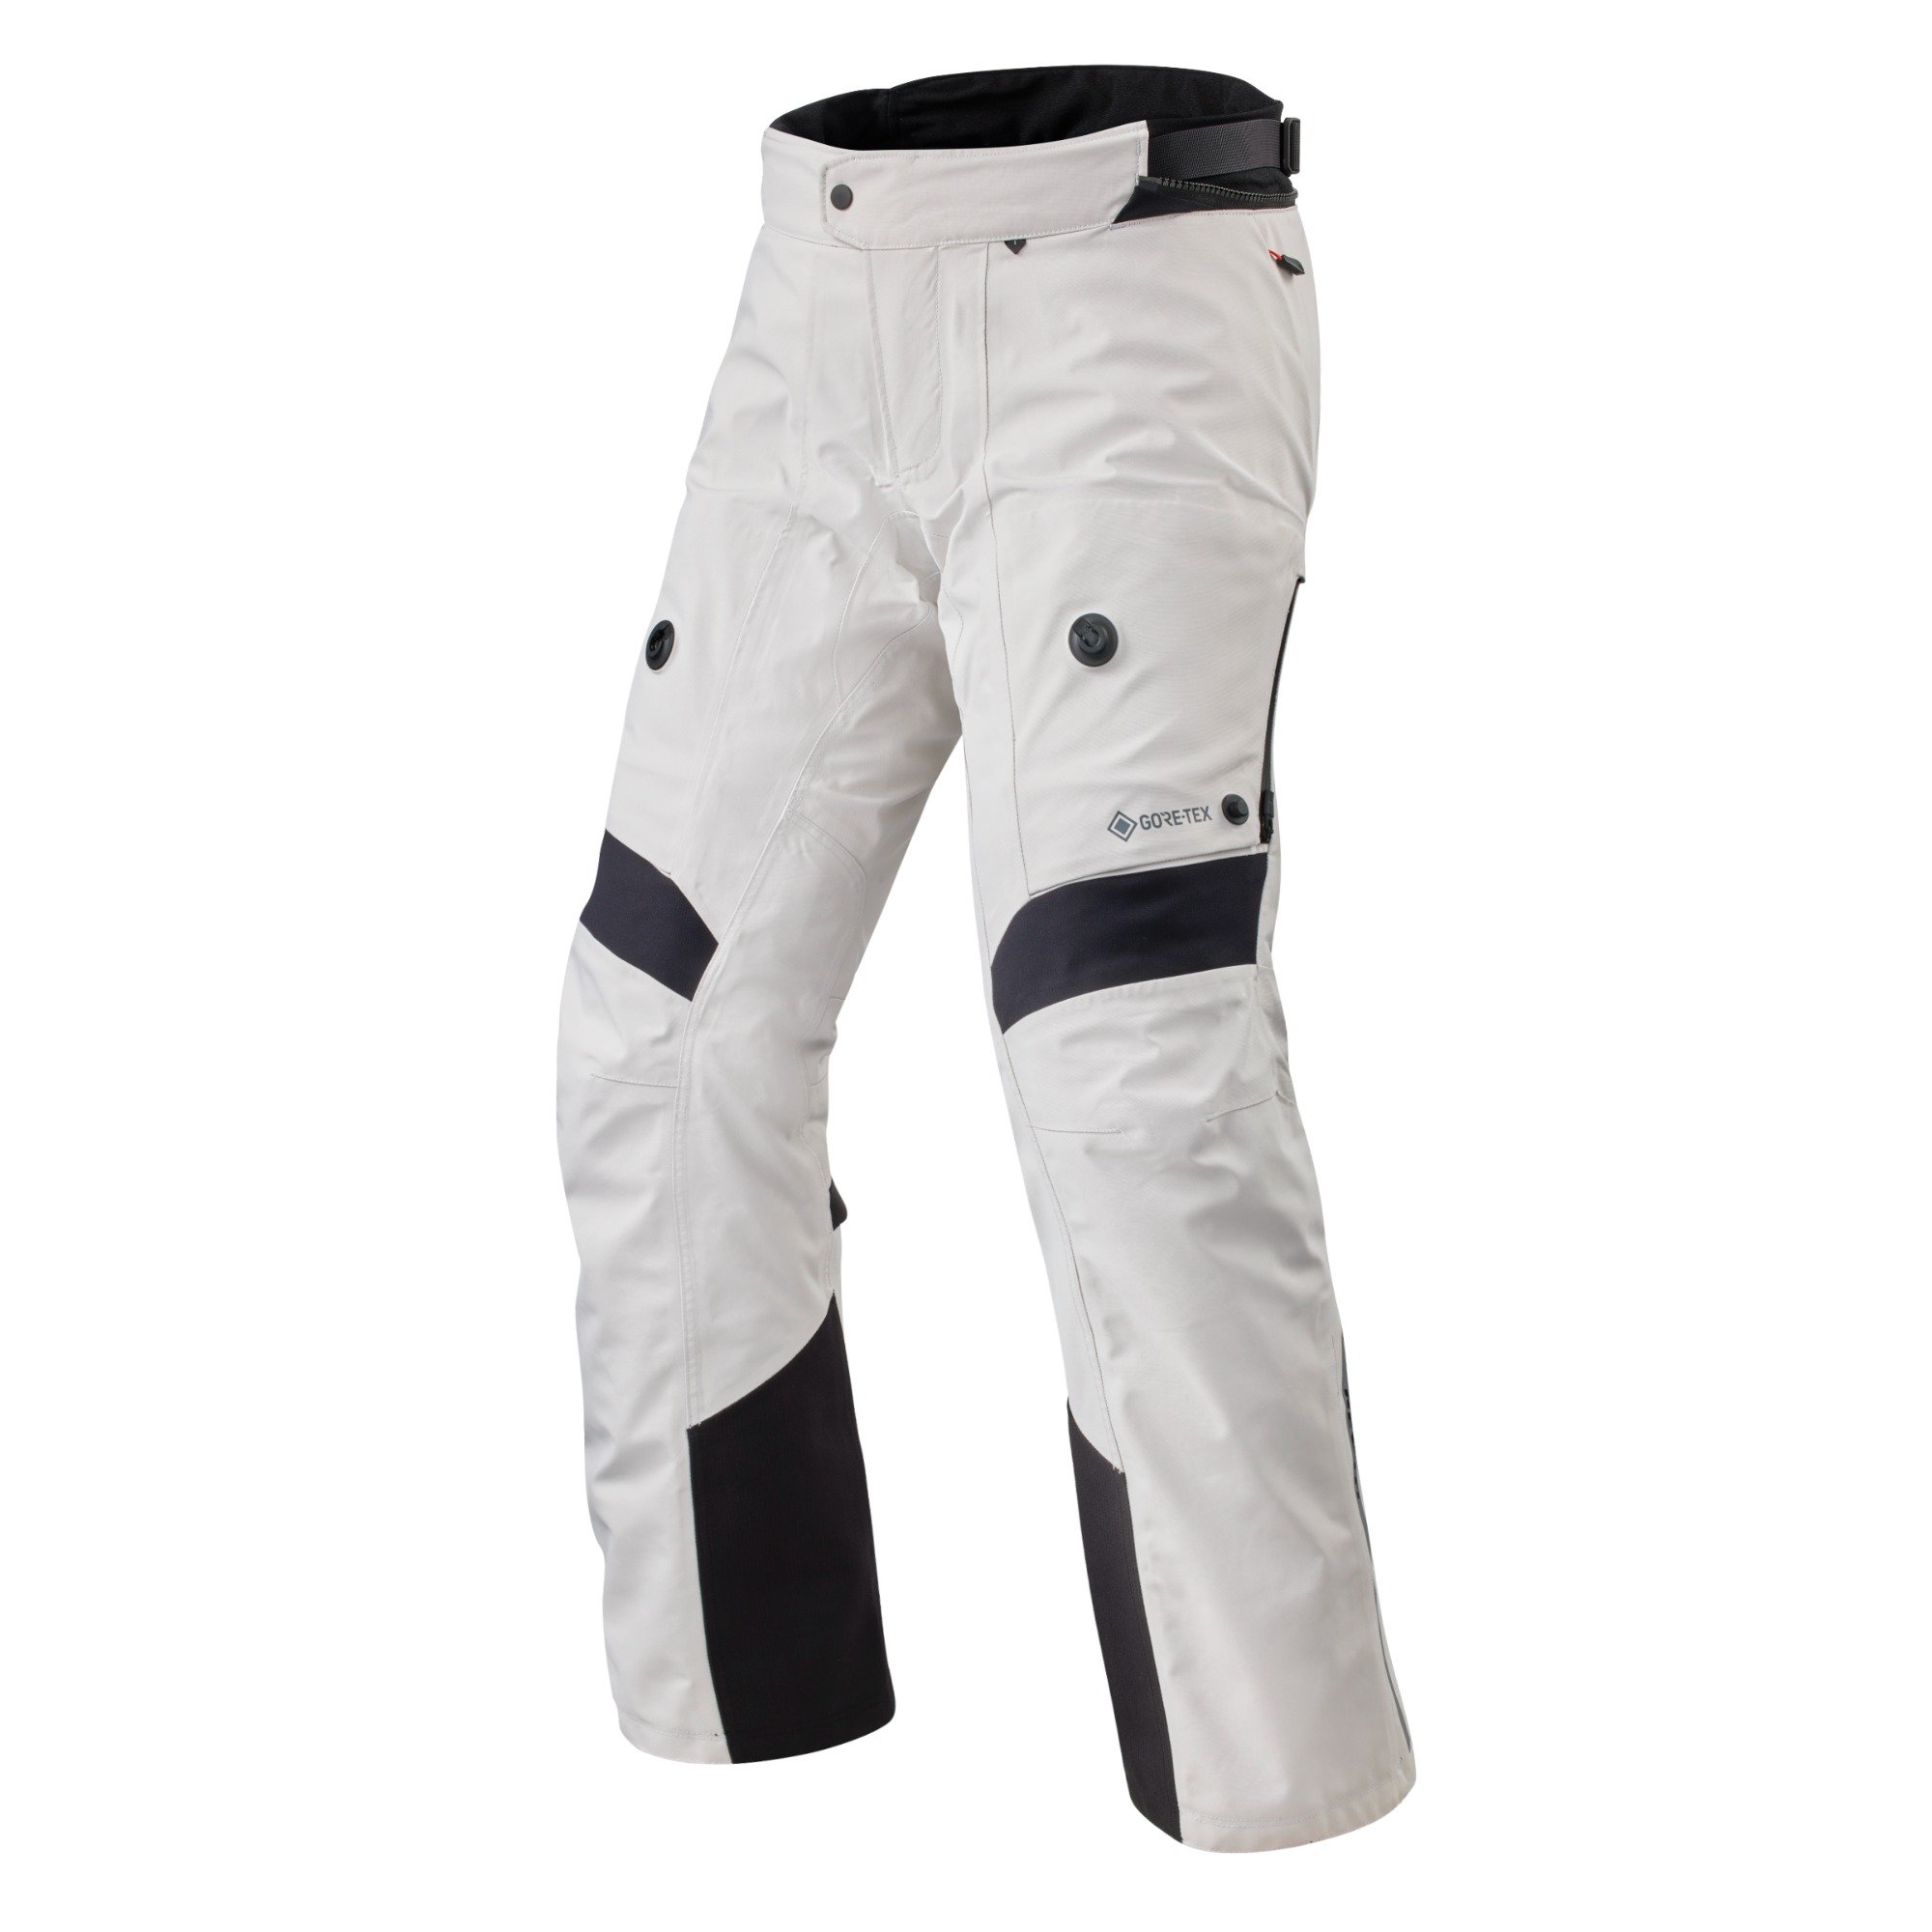 Image of REV'IT! Pants Poseidon 3 GTX Silver Black Standard Motorcycle Pants Talla M